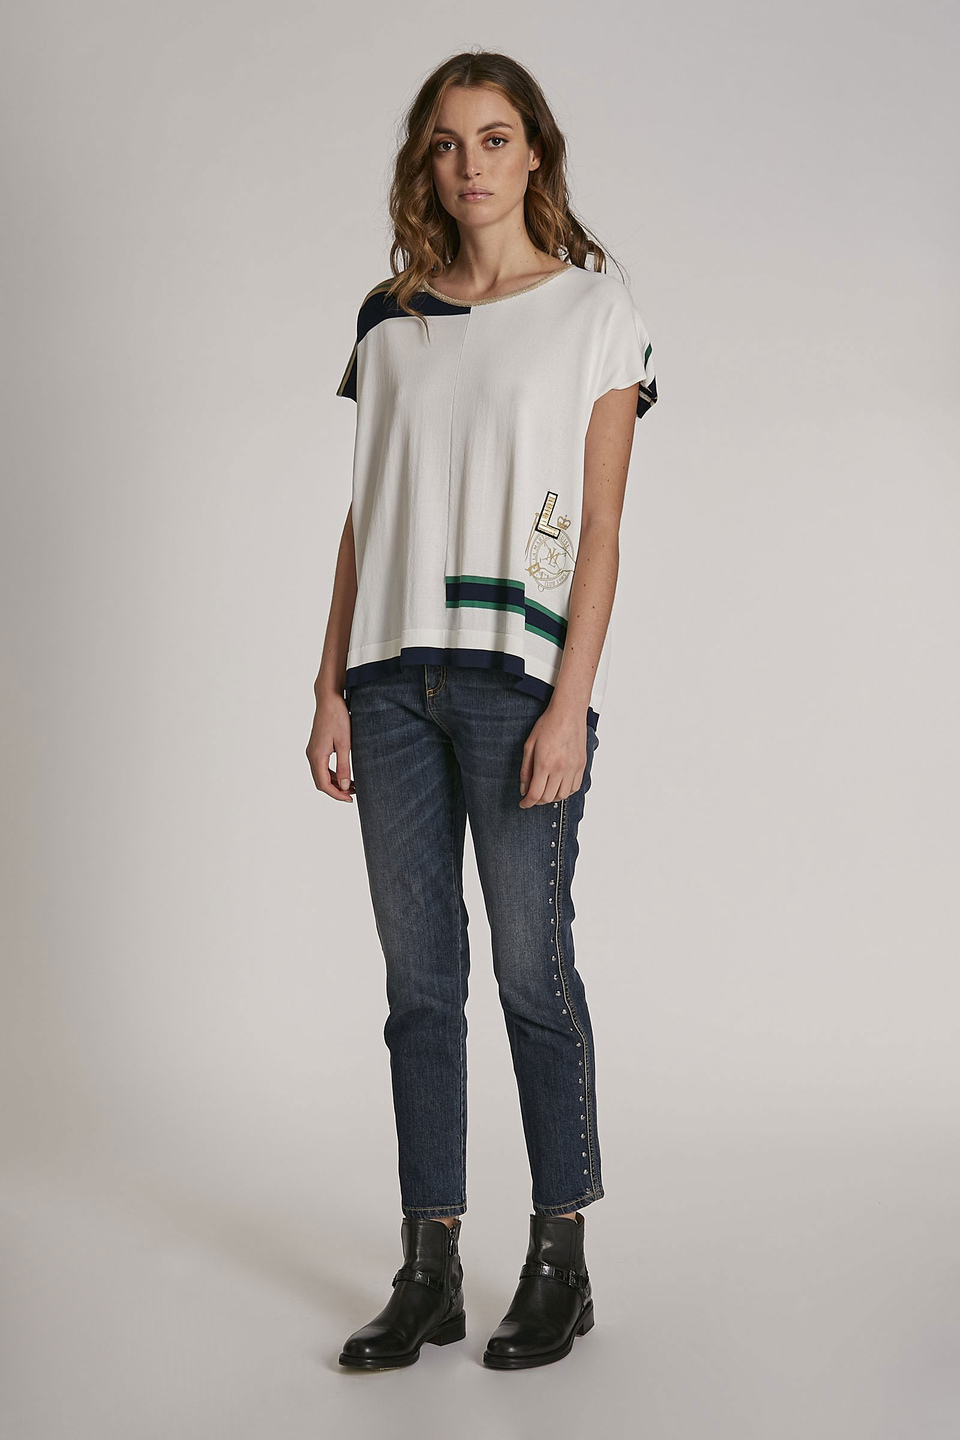 Damen-T-Shirt aus Baumwolle mit Logo, oversized Modell | La Martina - Official Online Shop